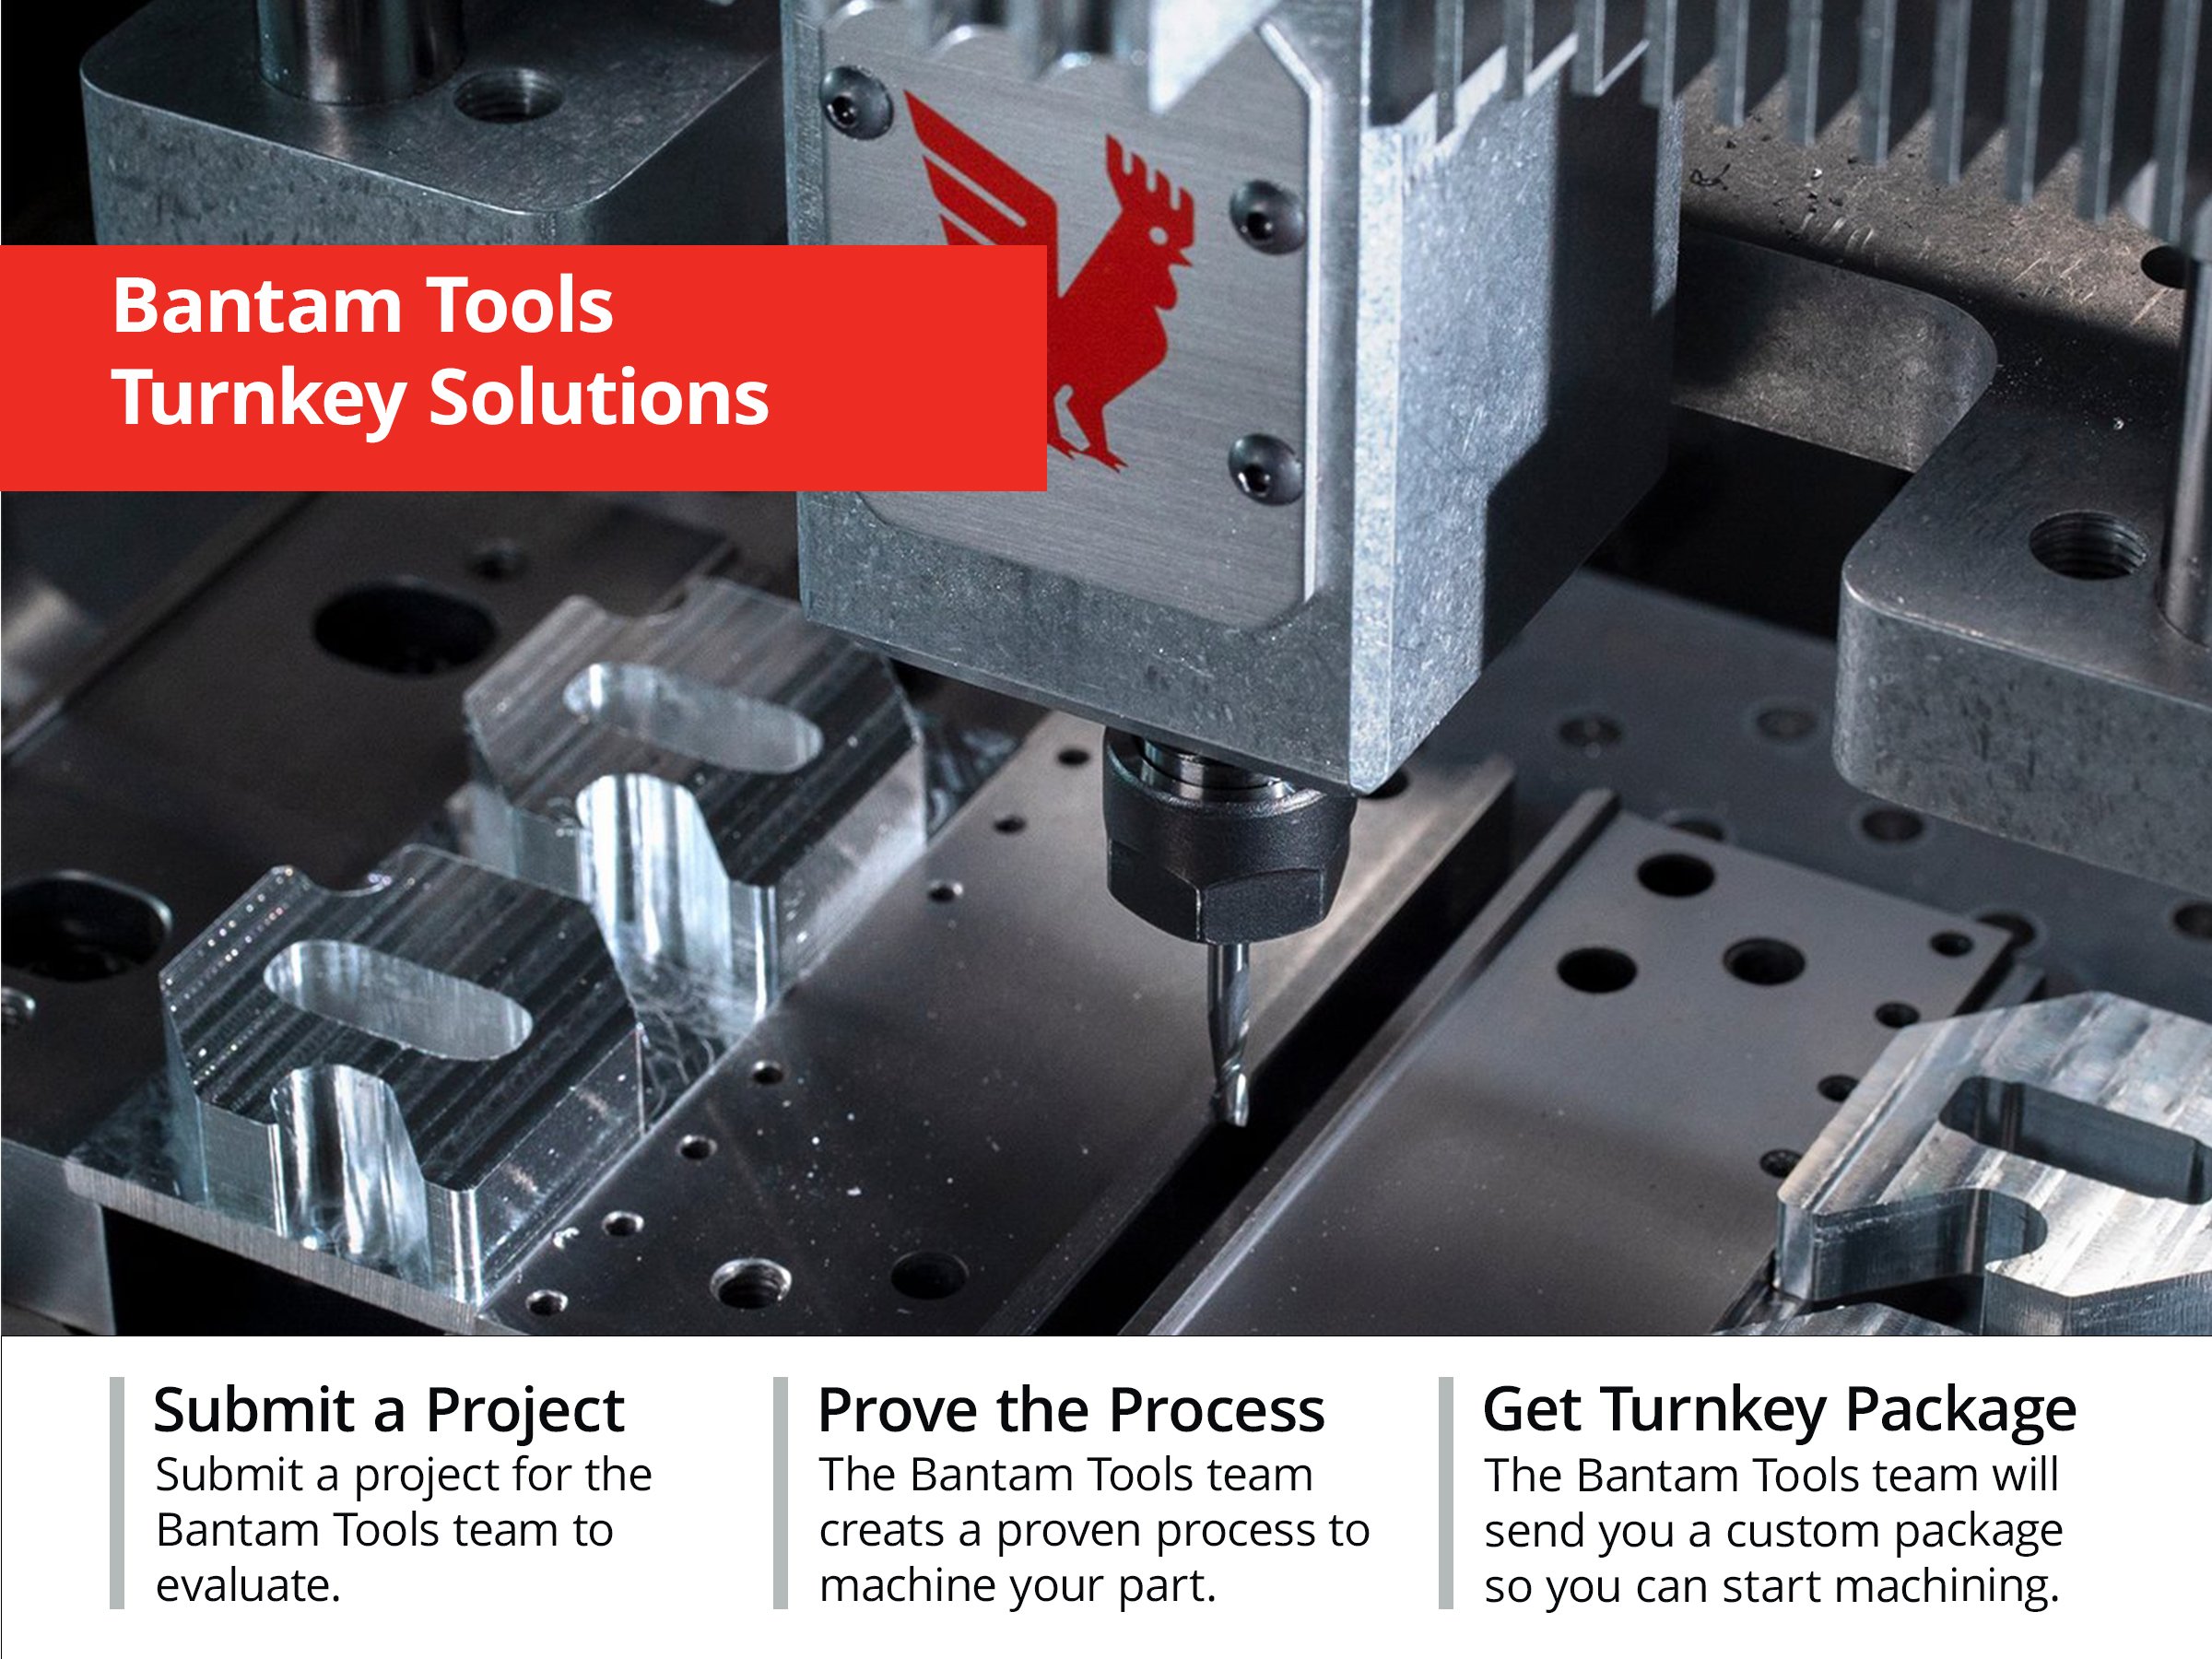 Bantam Tools Turnkey Solutions Product Tile.jpg